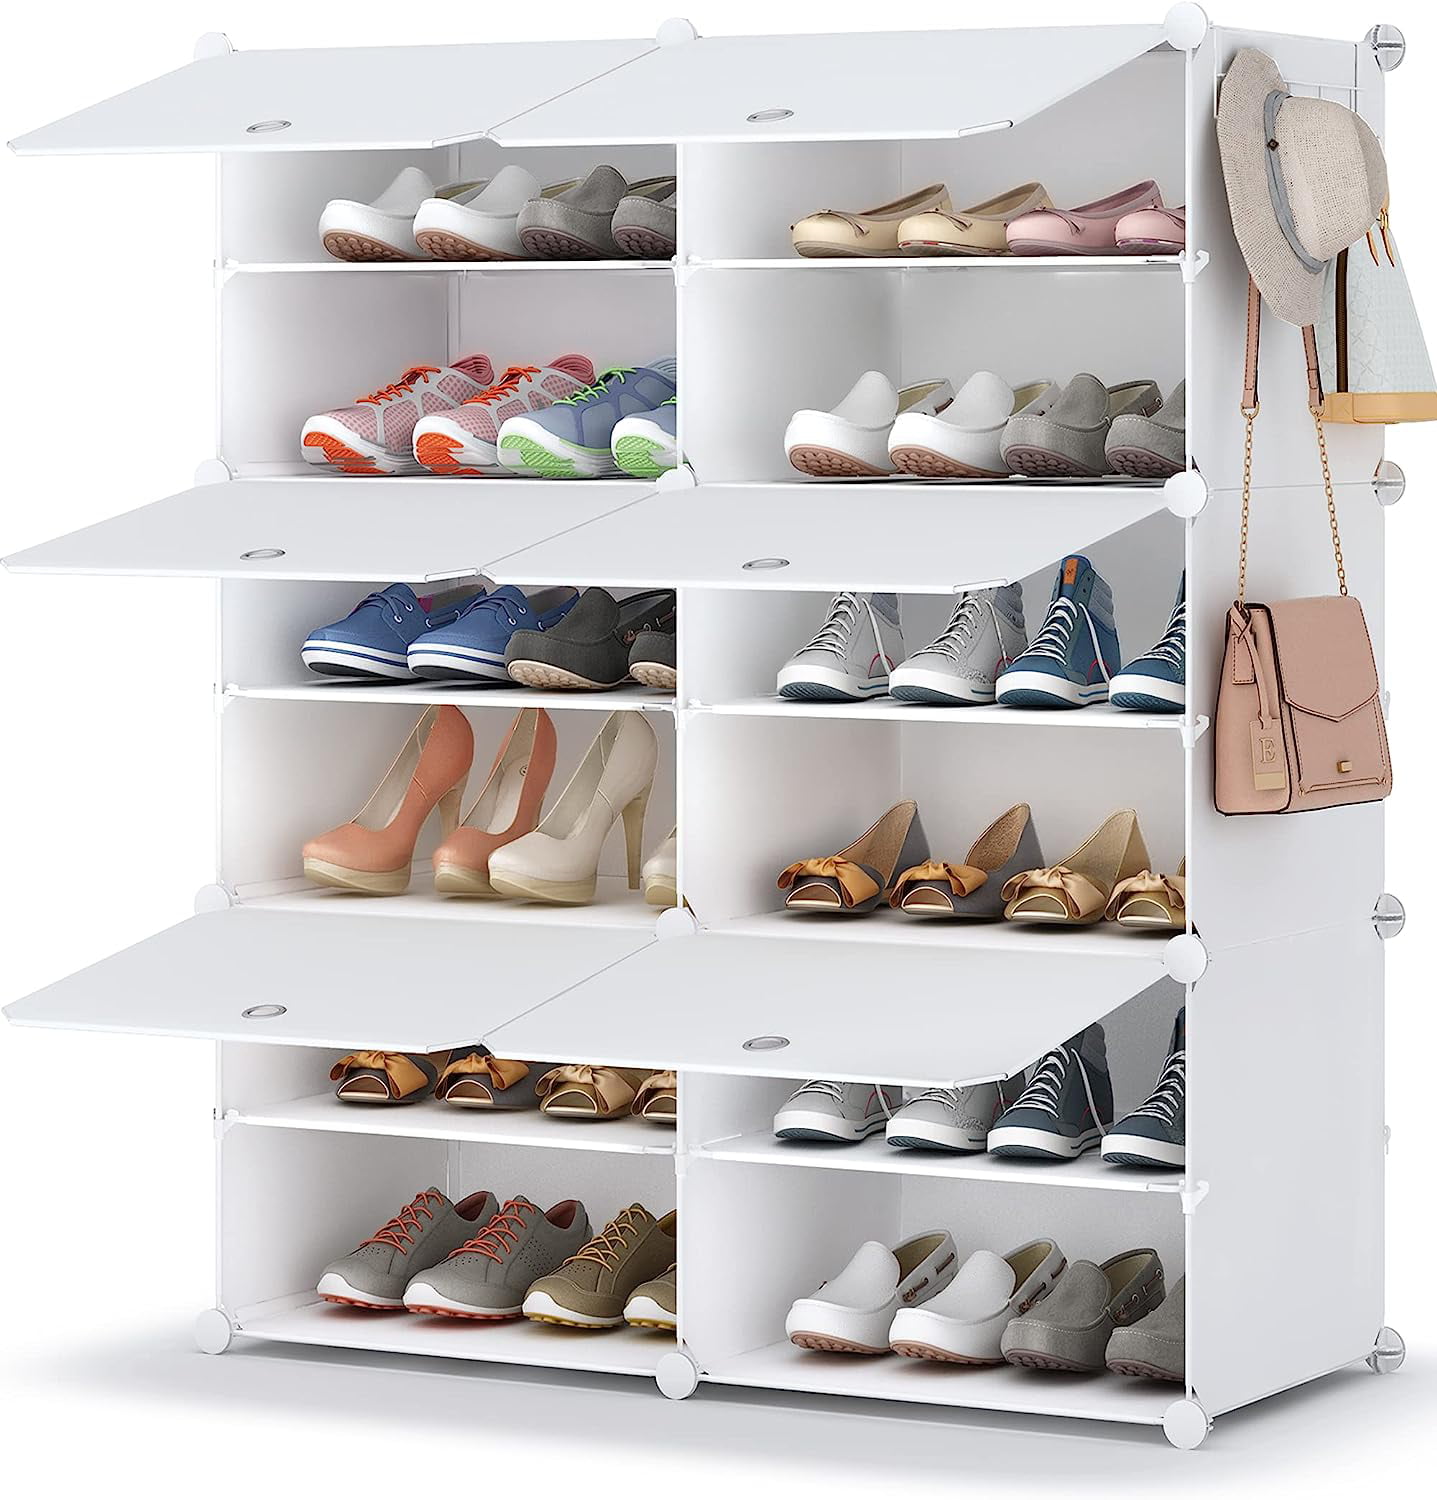  HOMIDEC Shoe Rack, 8 Tier Shoe Storage Cabinet 32 Pair Plastic  Shoe Shelves Organizer for Closet Hallway Bedroom Entryway : Home & Kitchen